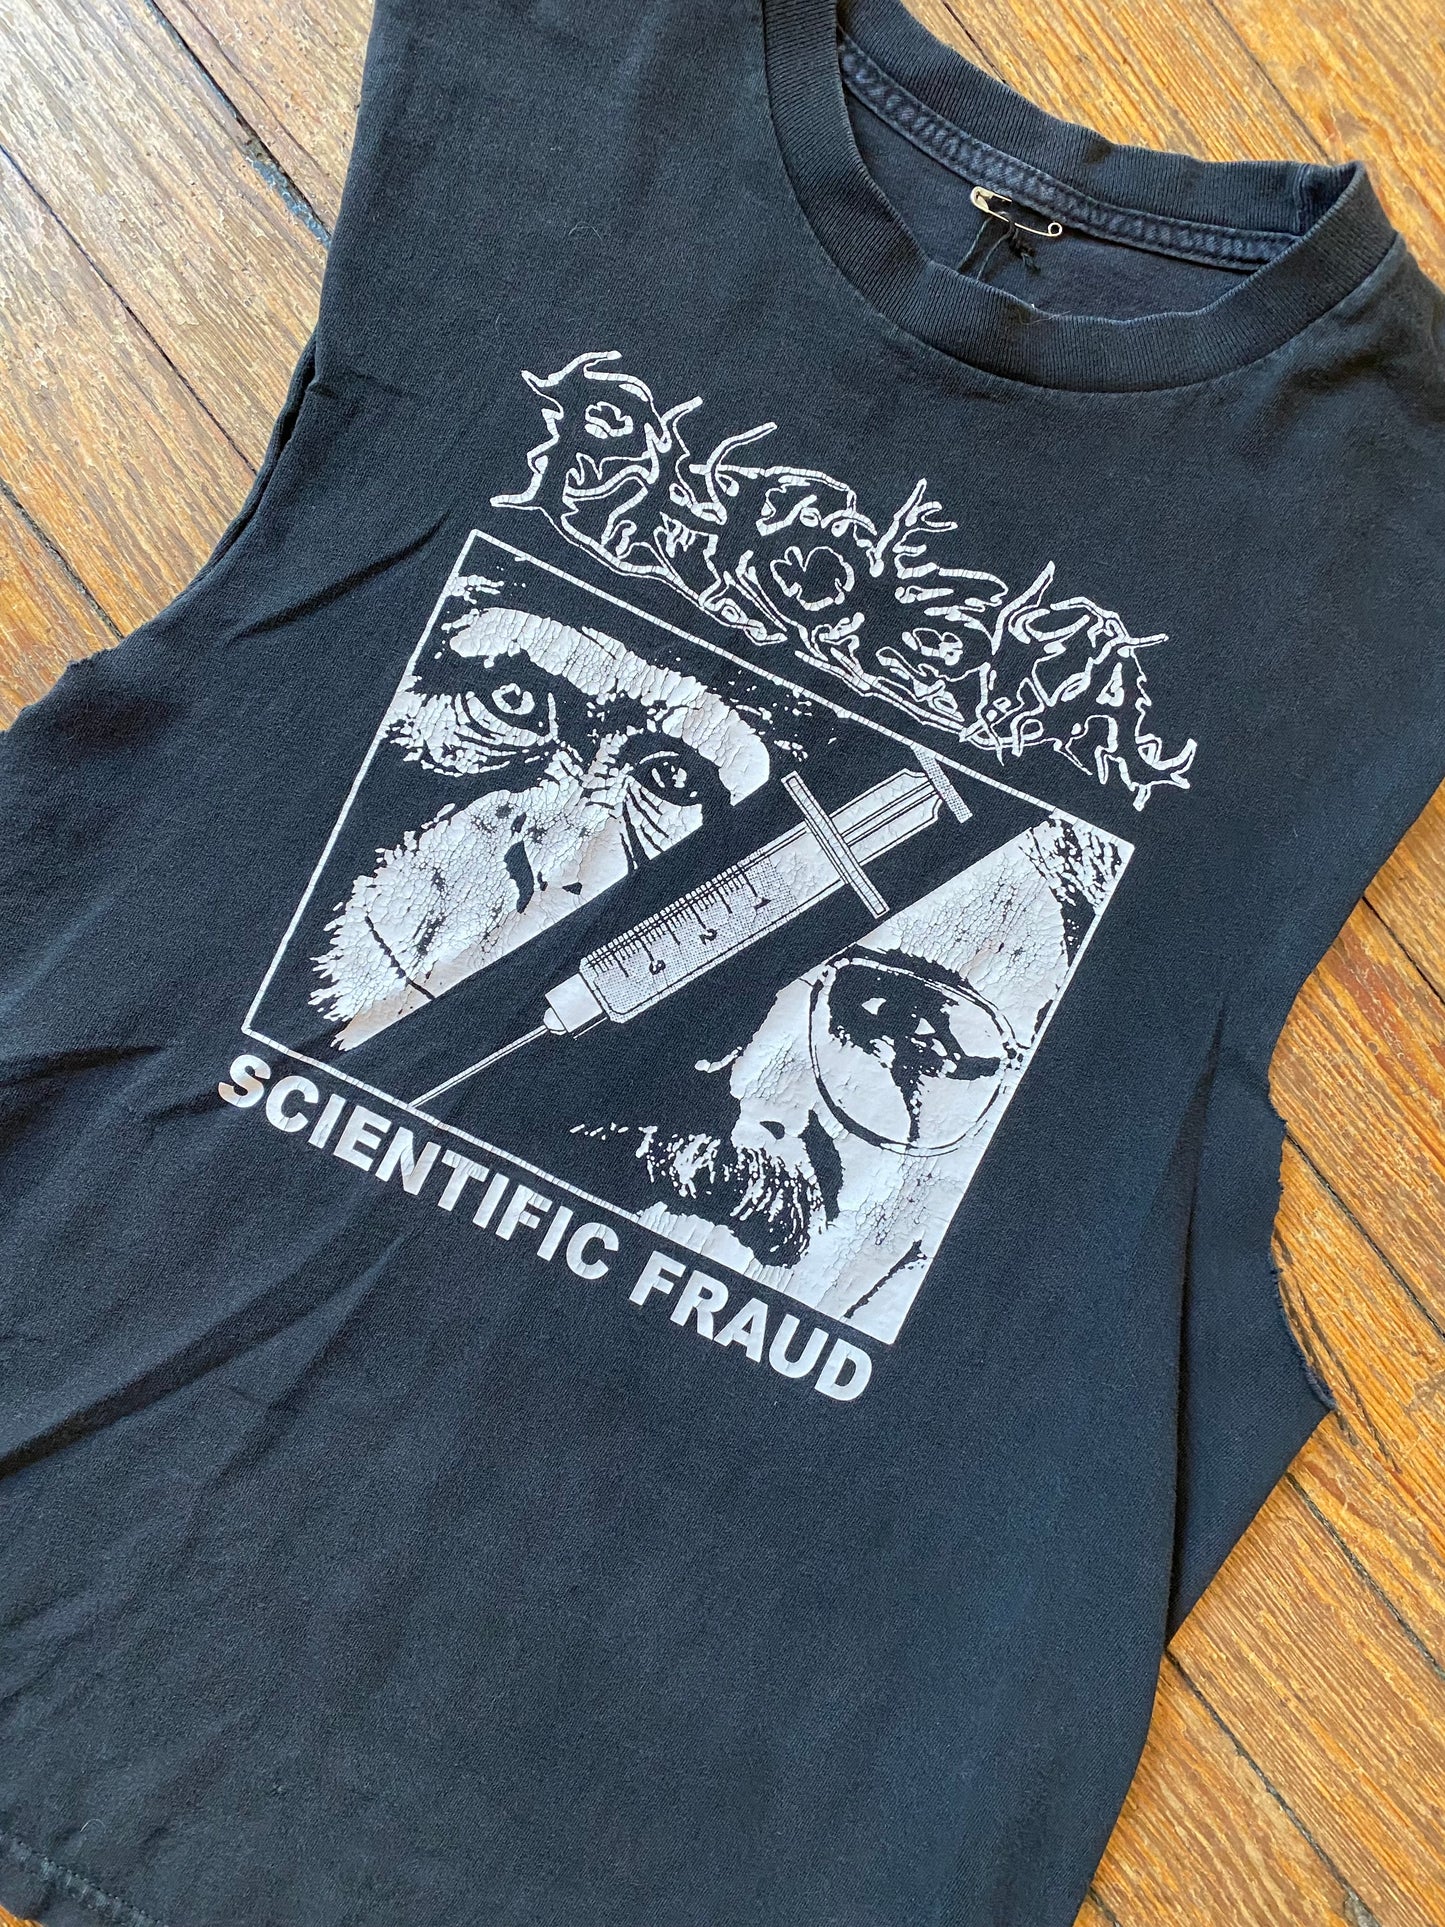 Phobia “Scientific Fraud” Sleeveless T-Shirt